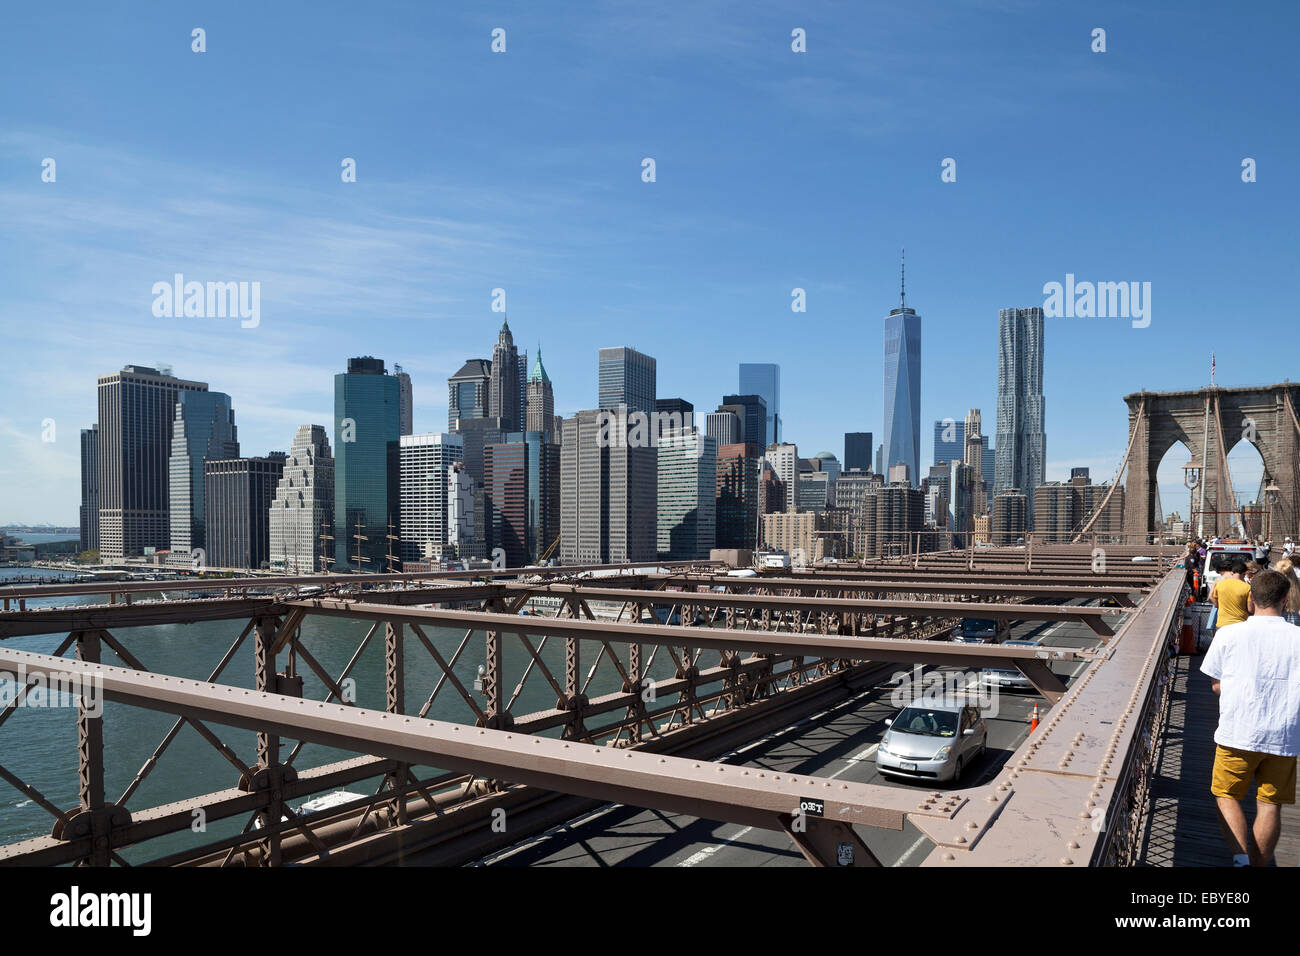 L'horizon de Manhattan, New York City est visible depuis le pont de Brooklyn. Banque D'Images